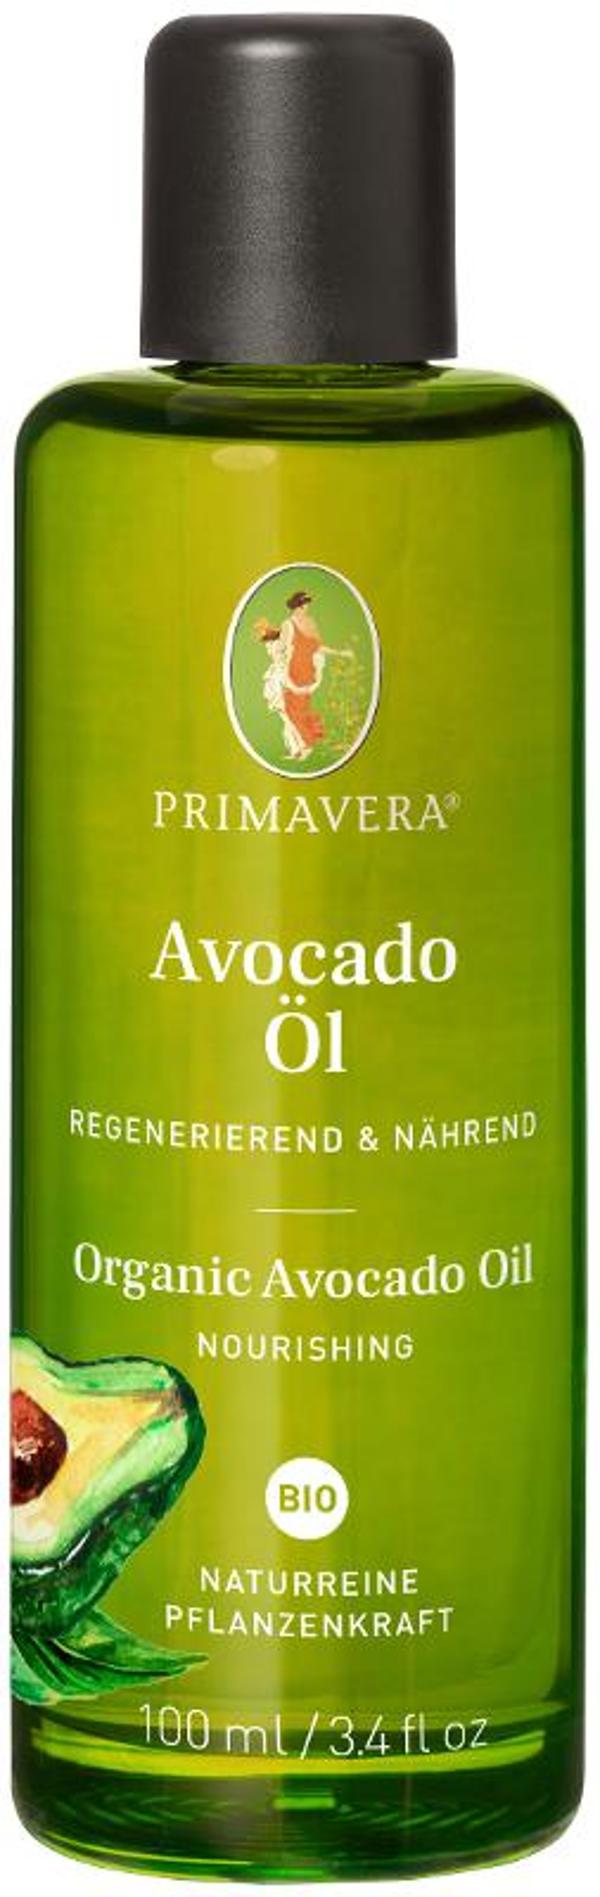 Produktfoto zu Avocado Pflegeöl 100 ml